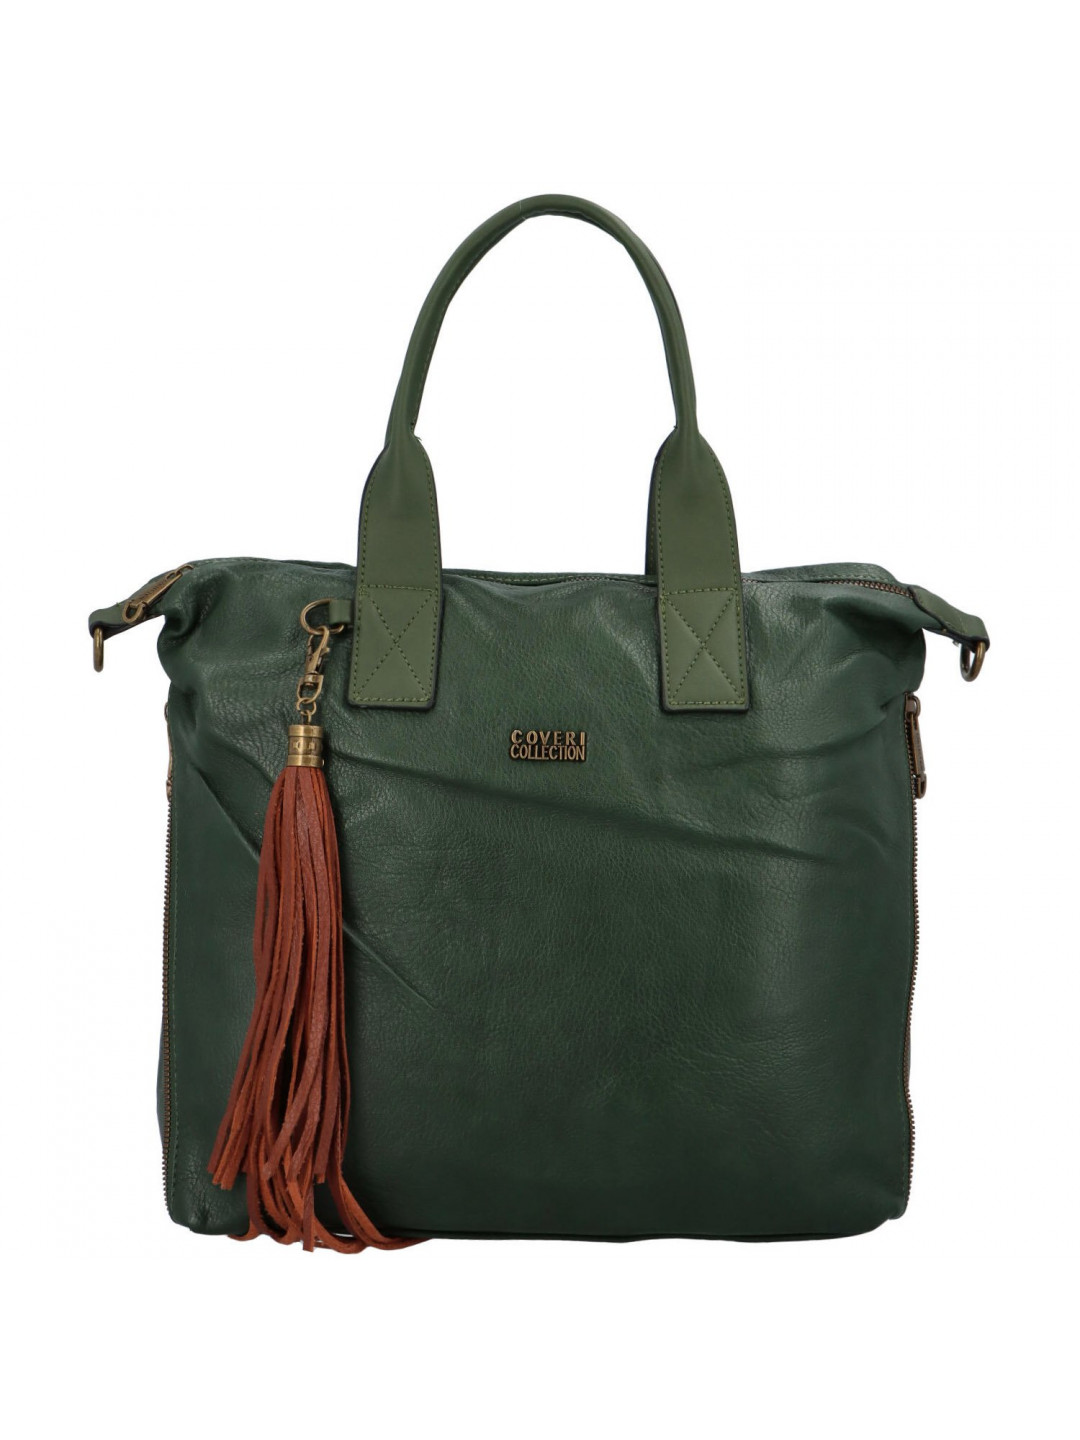 Dámská kabelka do ruky zelená – Coveri Elaine